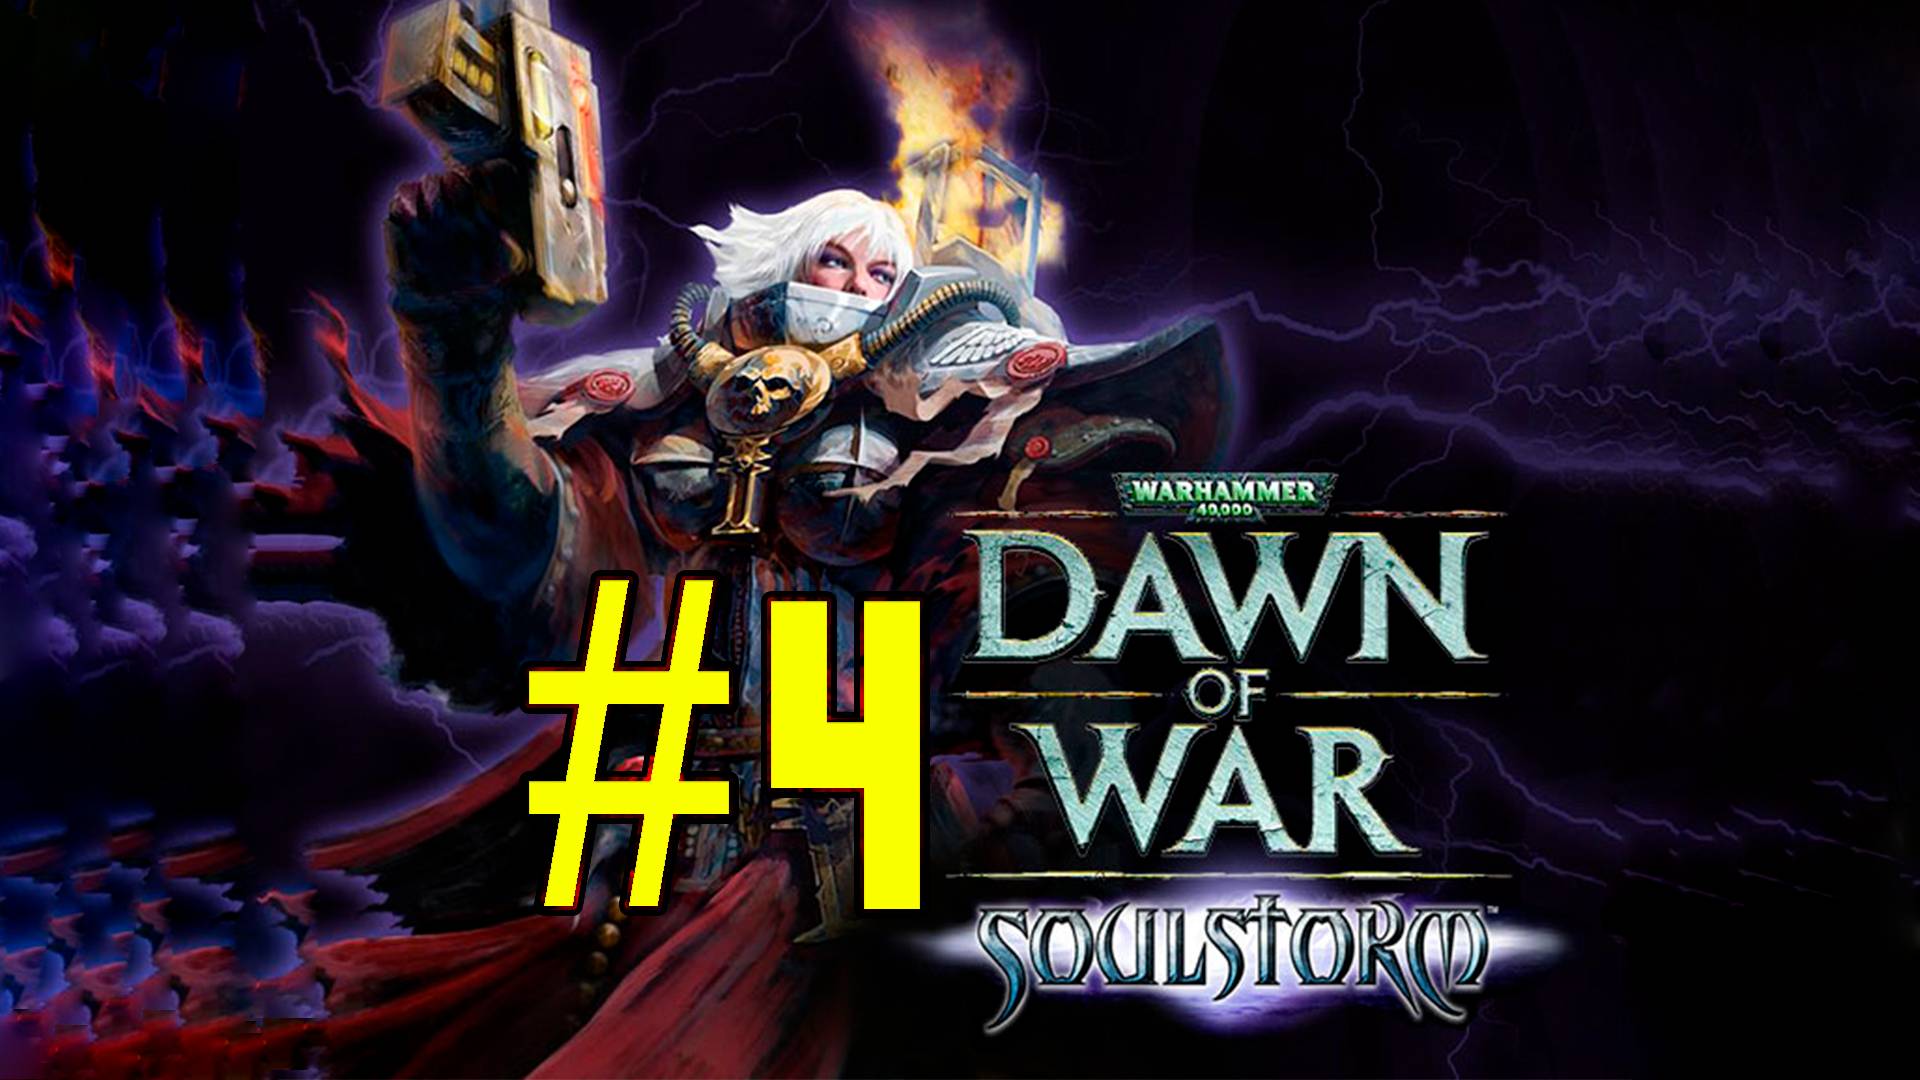 Warhammer 40,000: Dawn of War - Soulstorm. Игра. Четвёртый стрим. Прохождение компания #warhammer